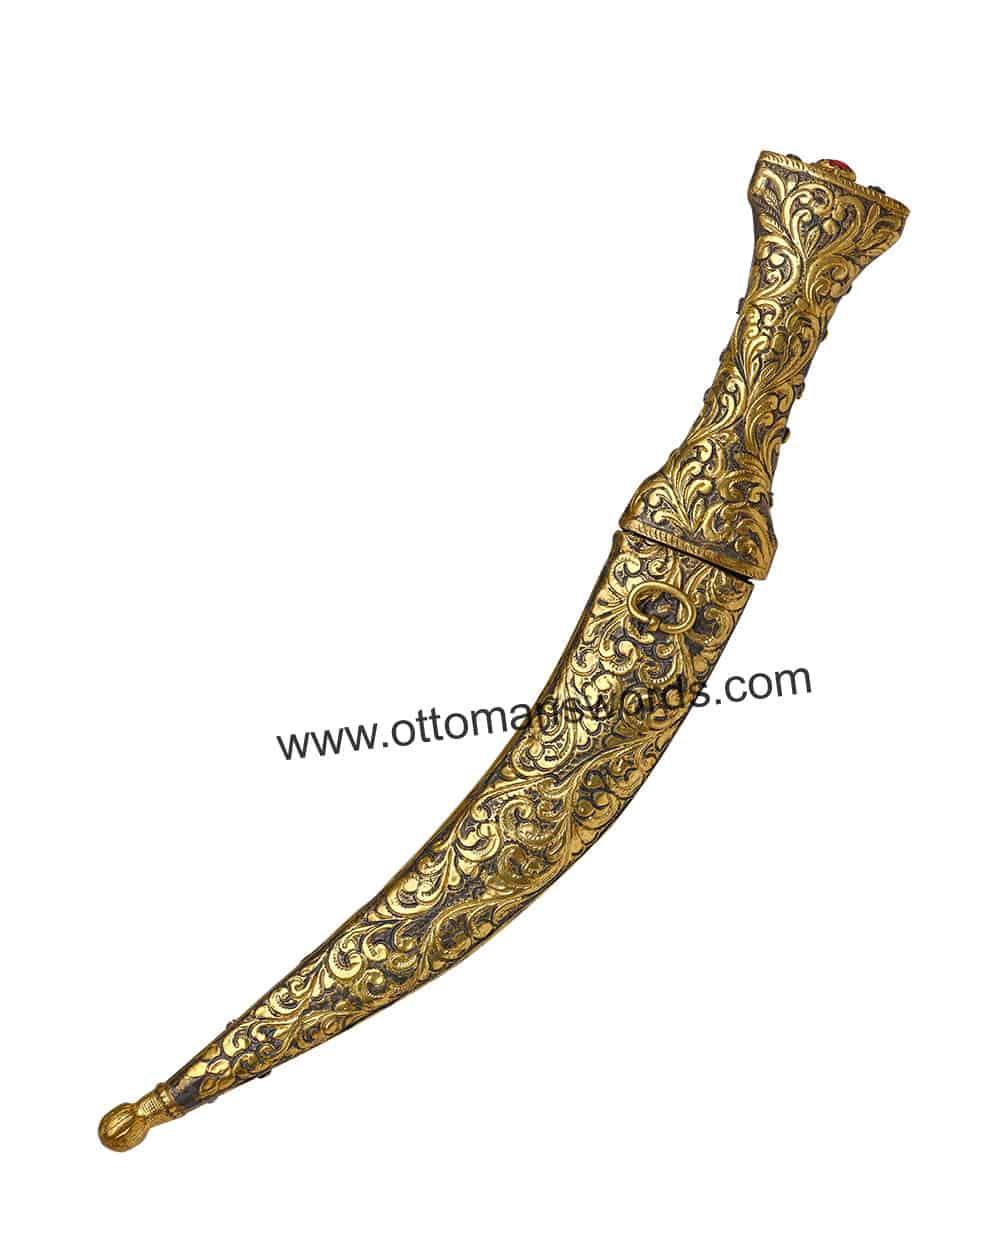 Ottoman Turkish Coral Dagger (2)